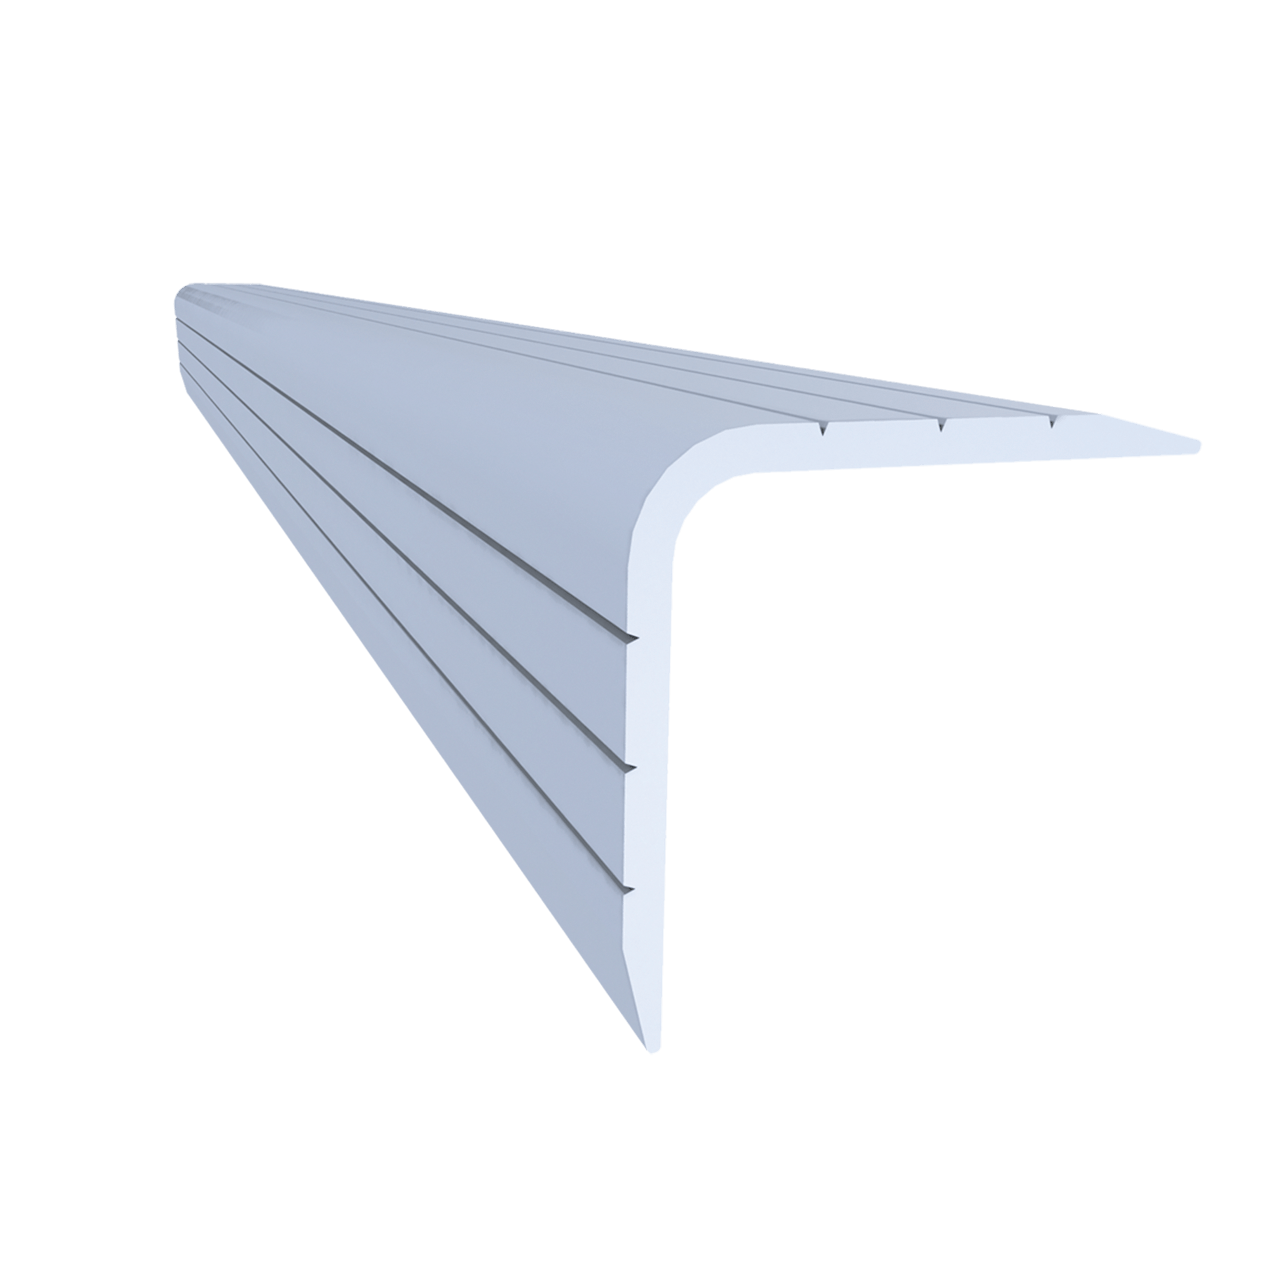 1" Aluminum Angle, 10 Feet Length